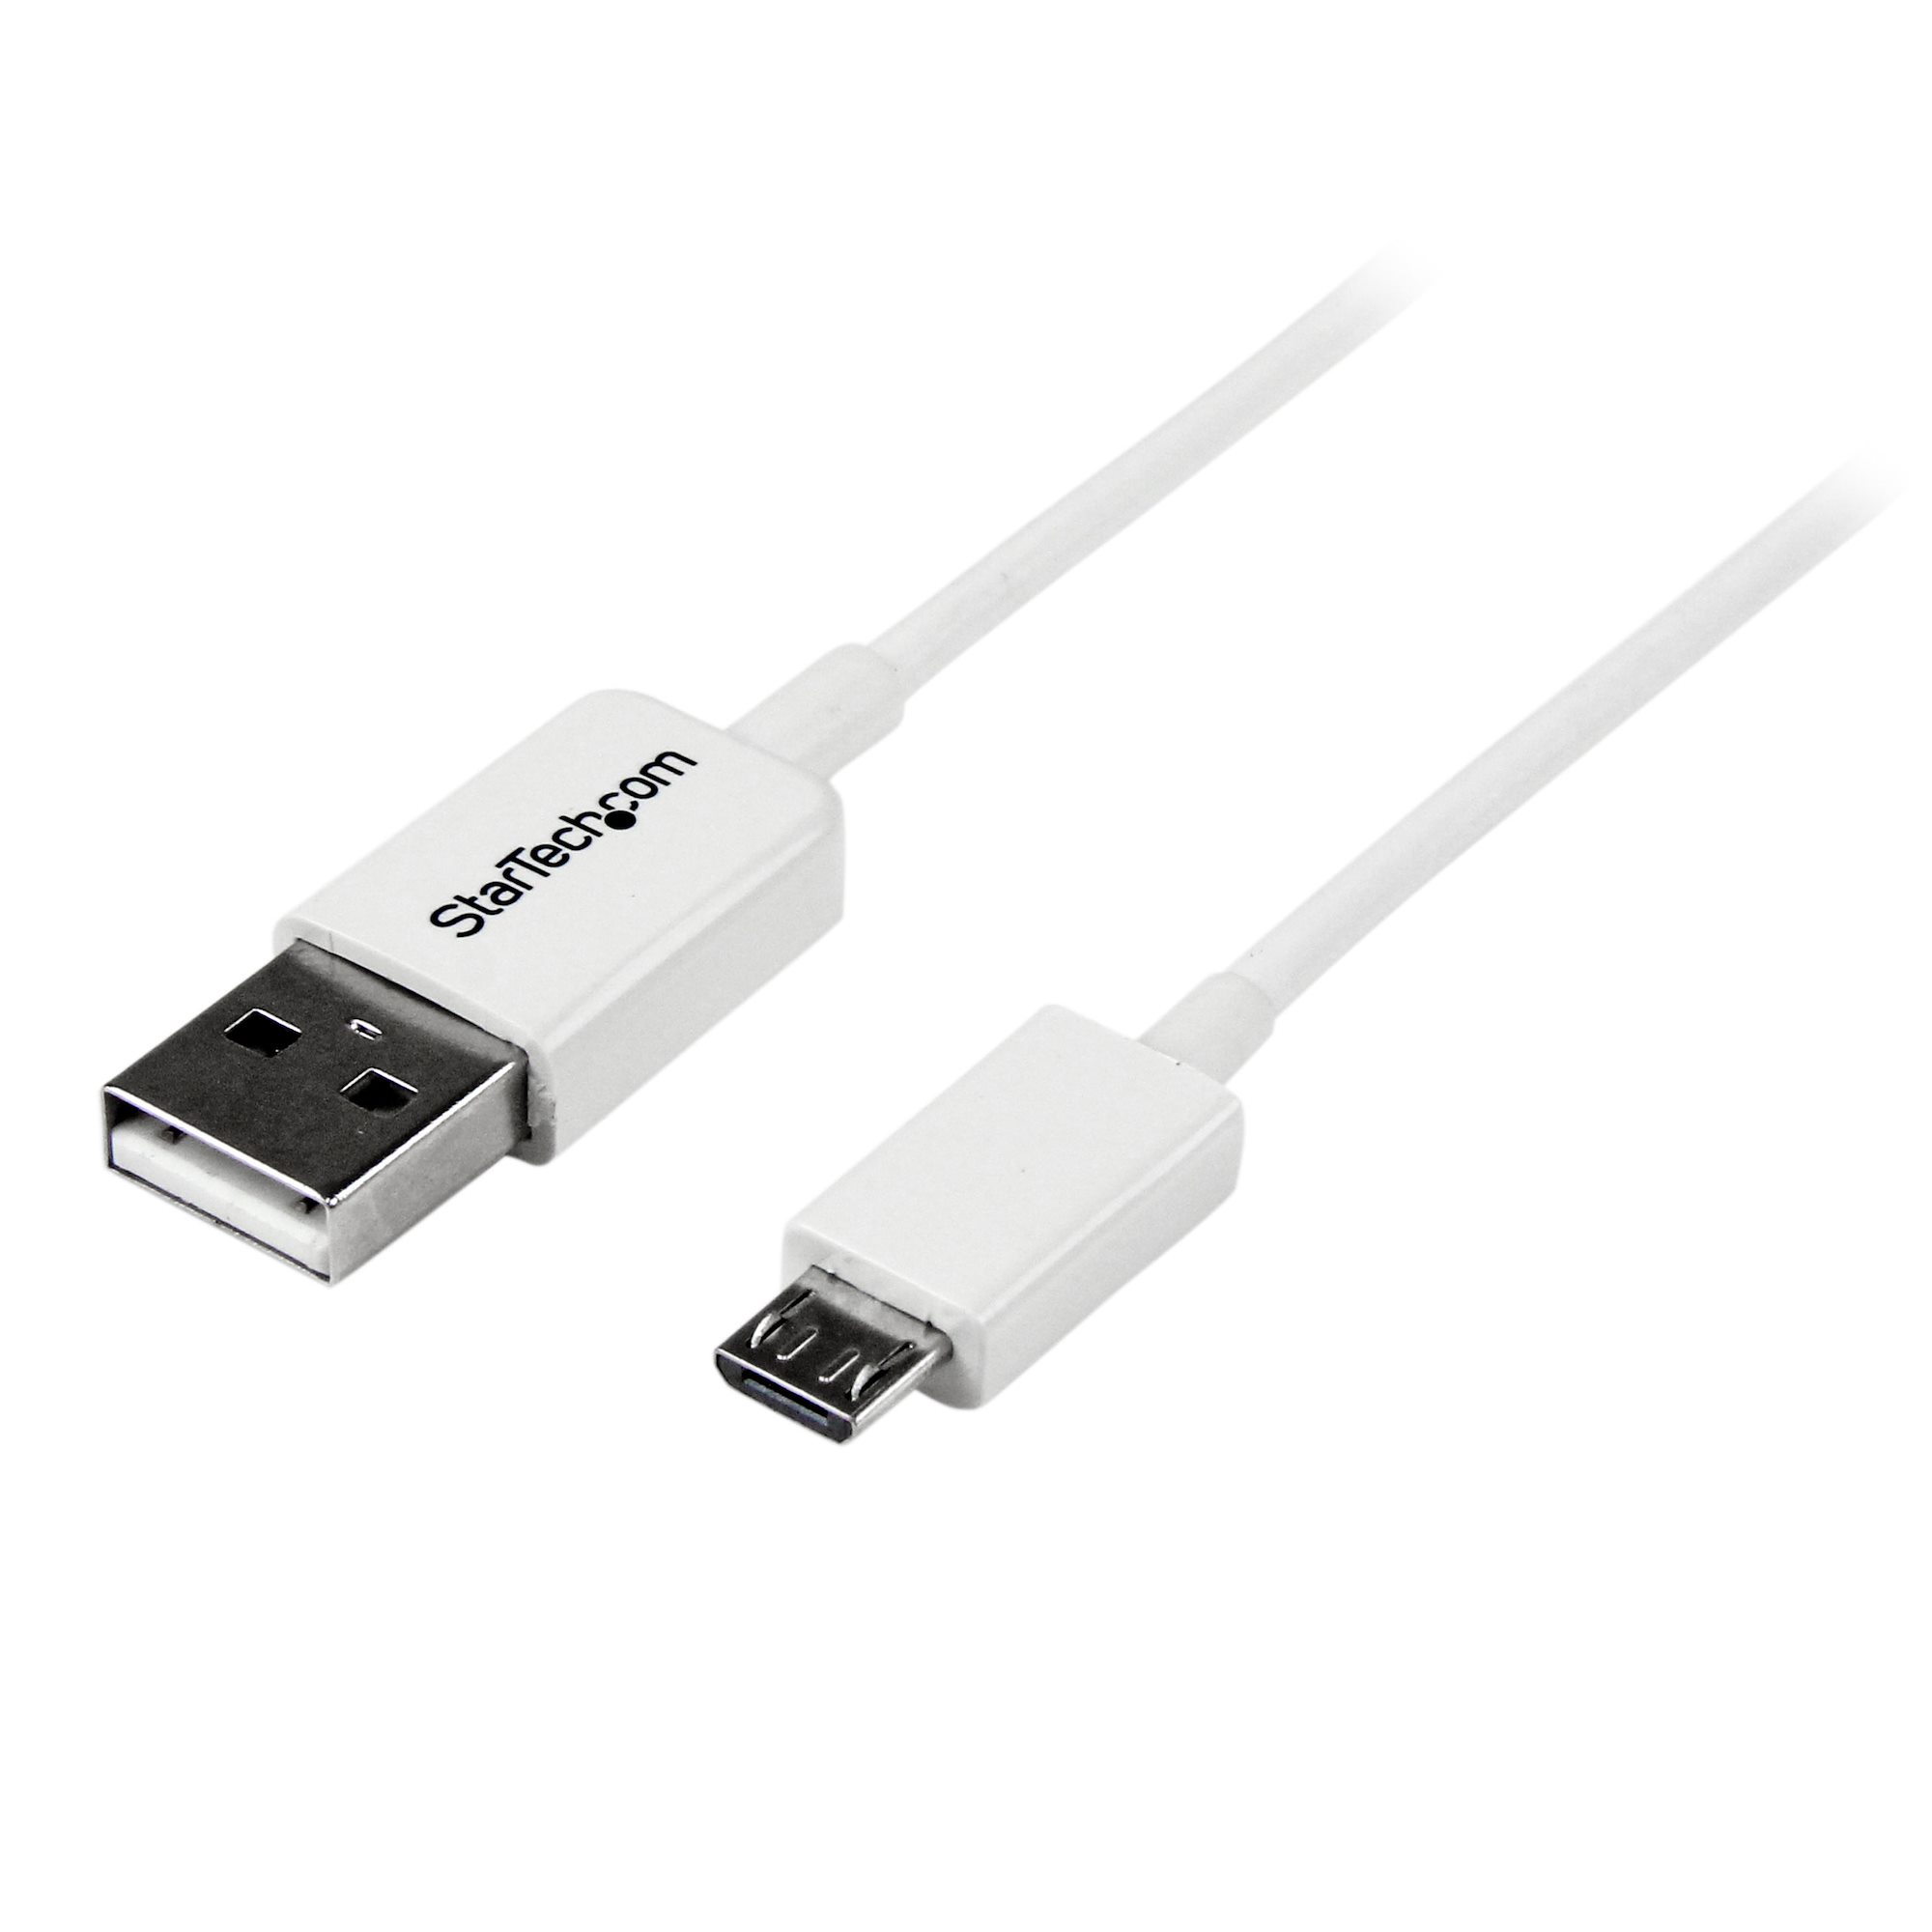 Ausencia Reorganizar Calibre 2m White Micro USB Cable - A to Micro B - Cables Micro USB | StarTech.com  Europa